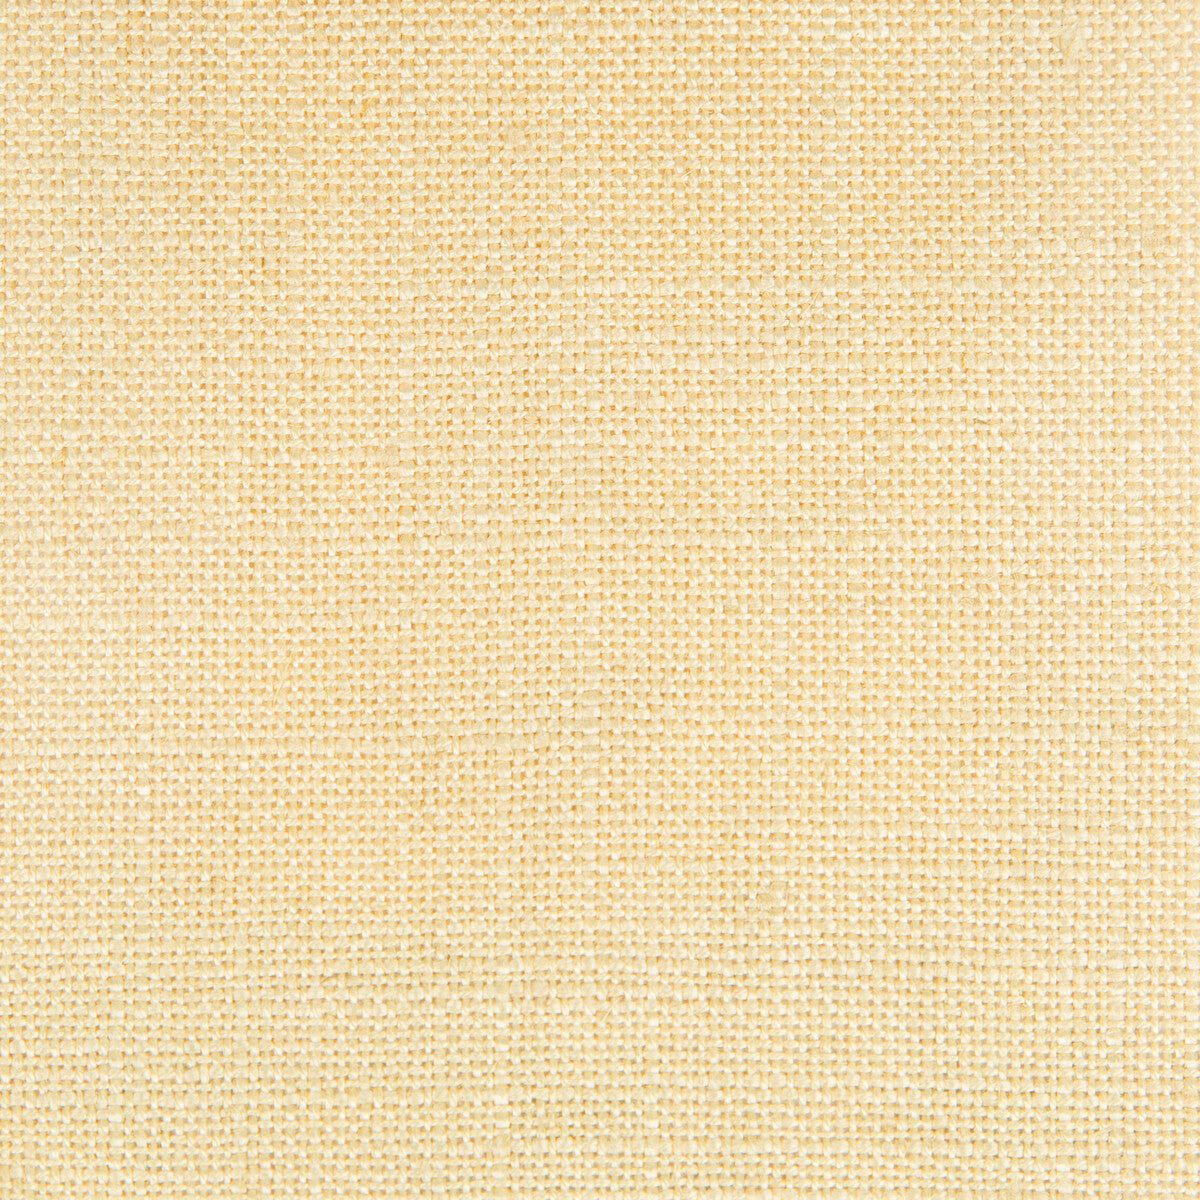 Peru fabric in beige color - pattern GDT5548.005.0 - by Gaston y Daniela in the Gaston Nuevo Mundo collection